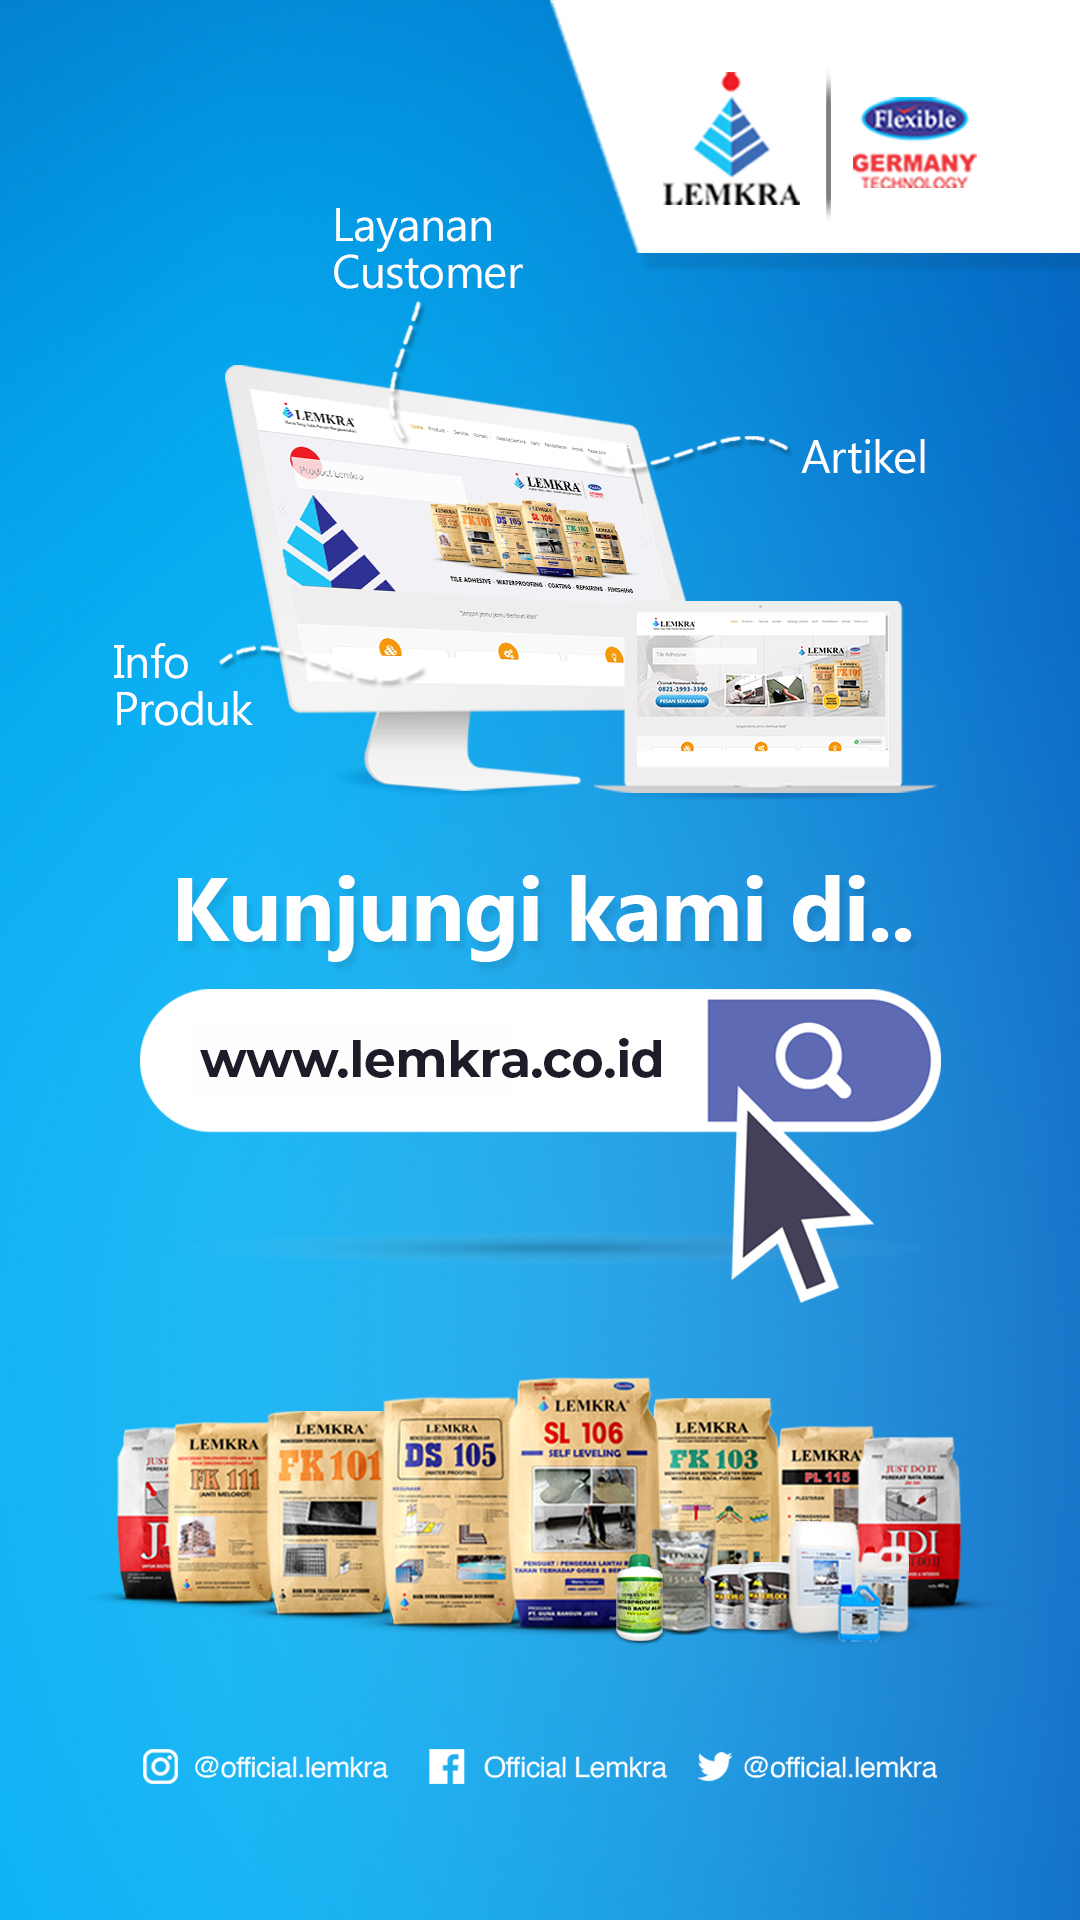 Lemkra Official Lemkra Twitter